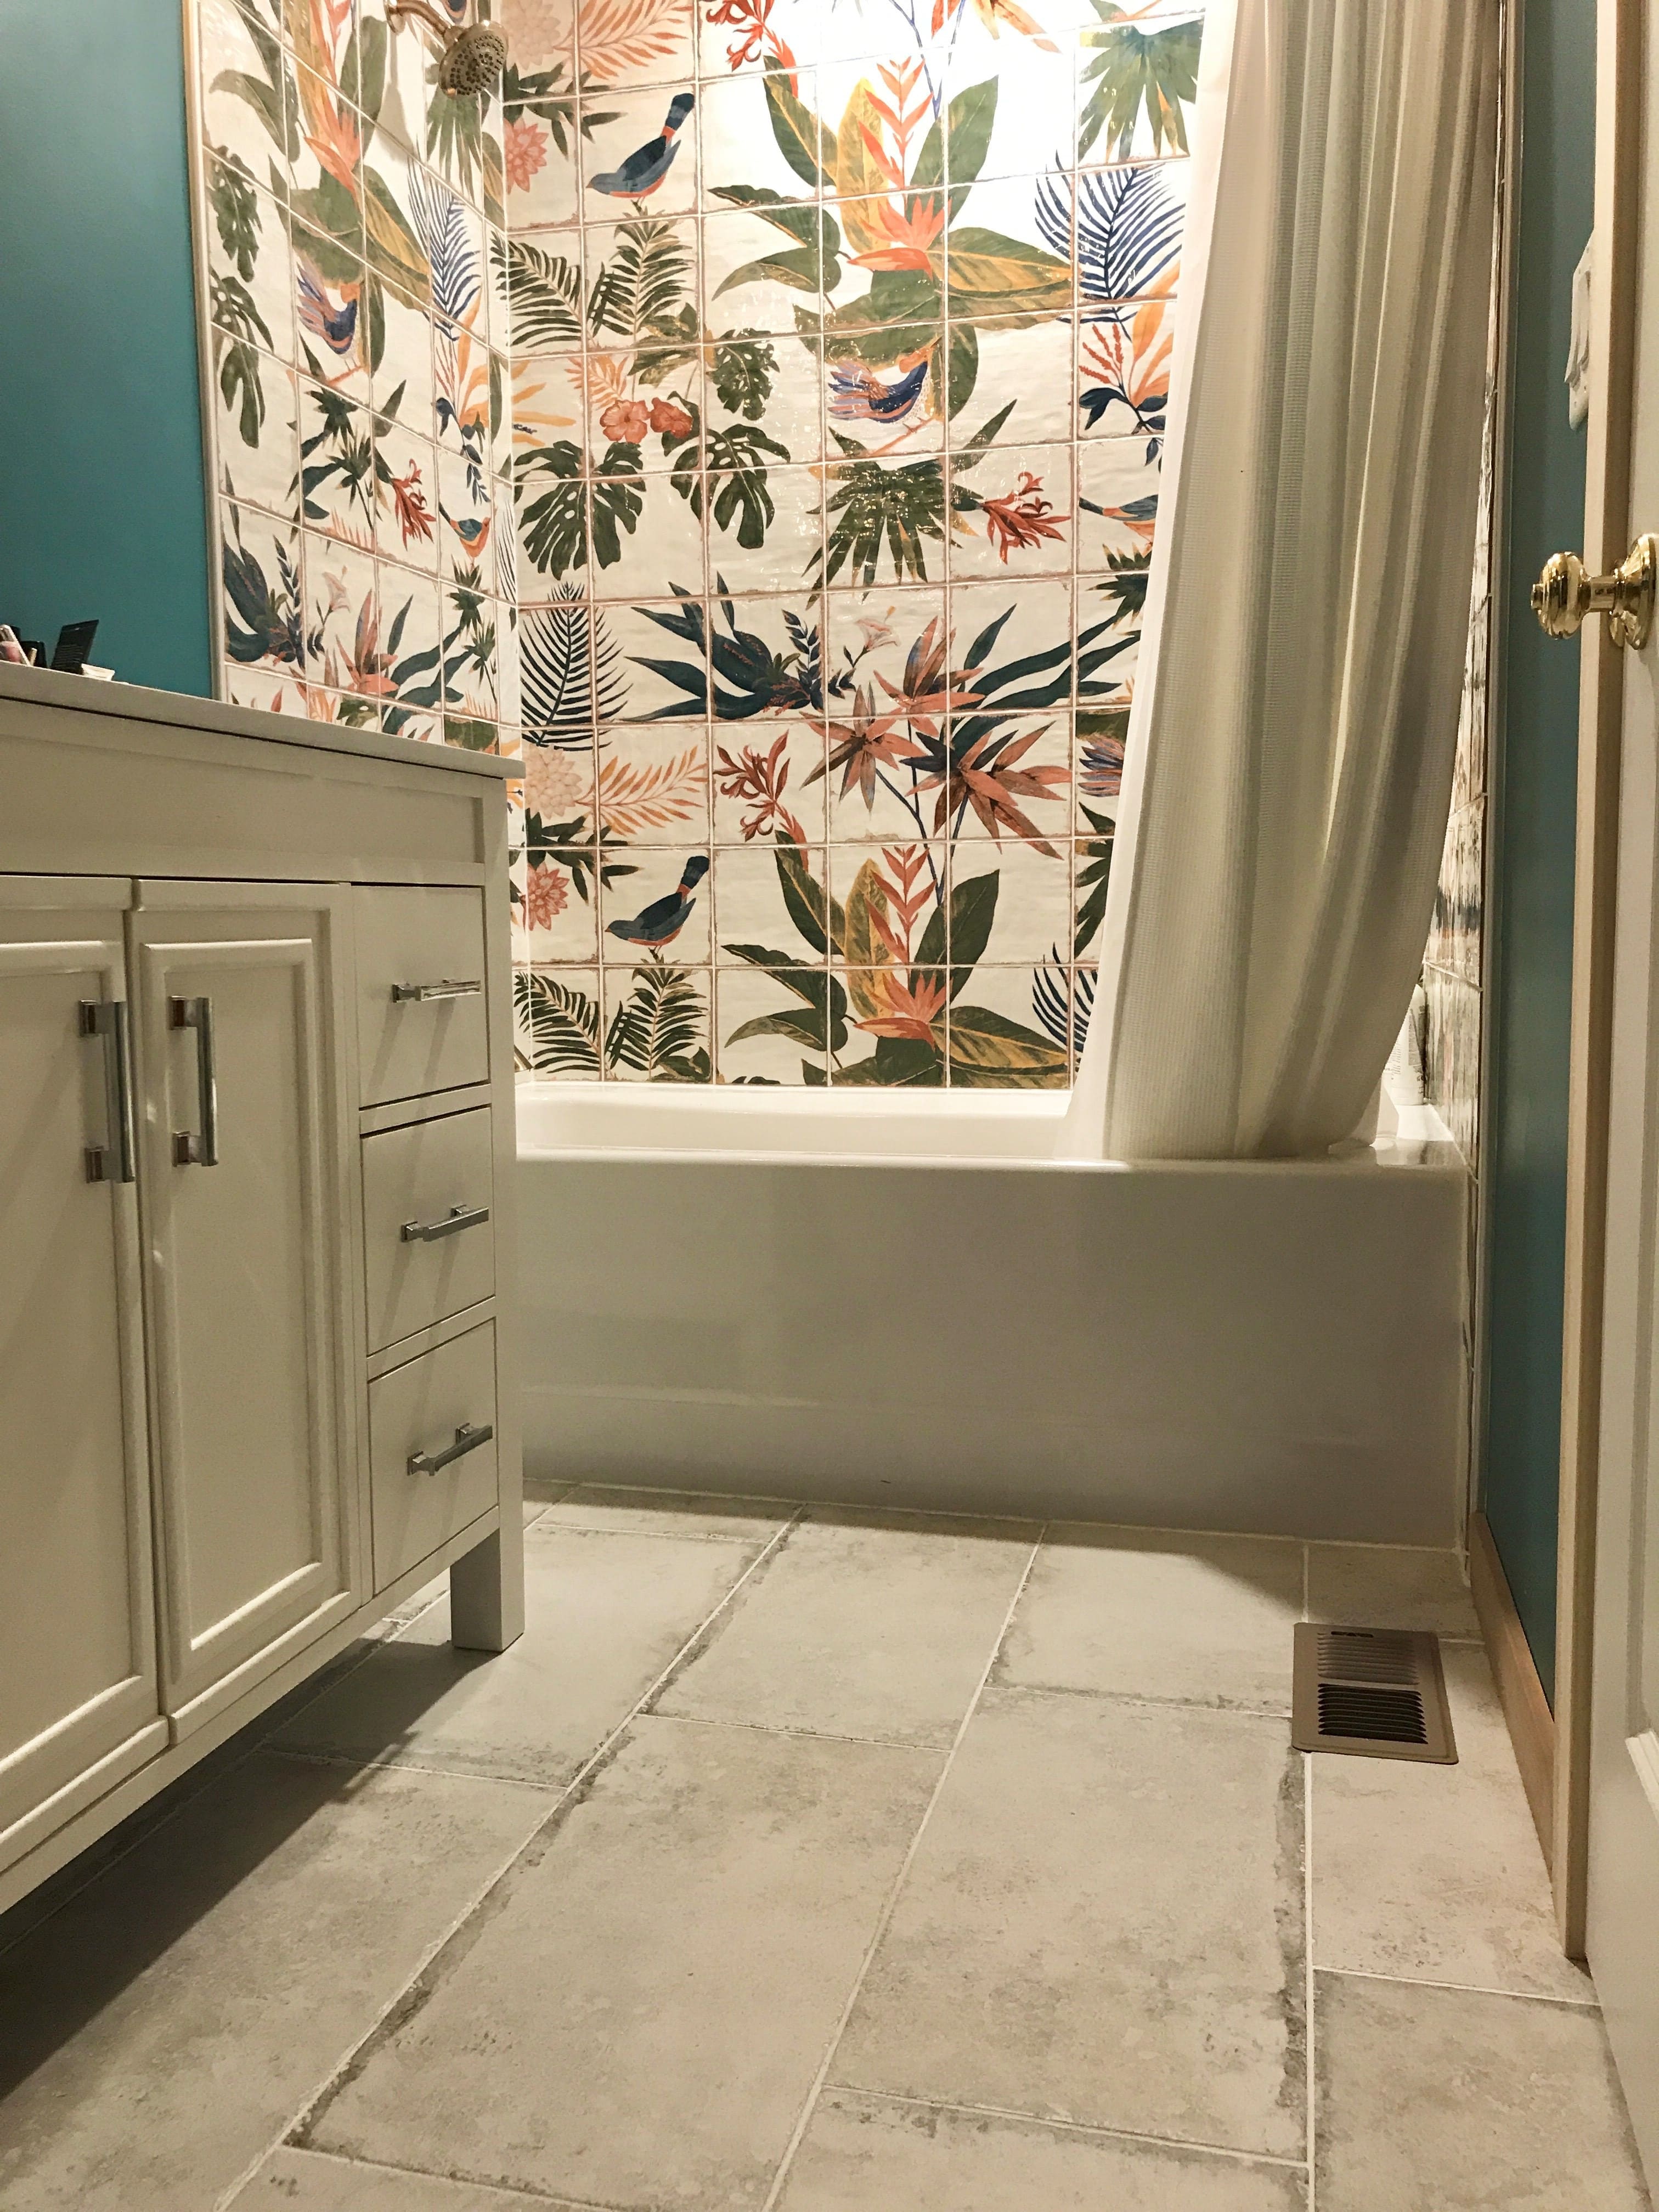 Angela Harris Dunmore Sonata Mural 8x8 Ceramic Tile shown as bath backsplash from bath to ceiling 